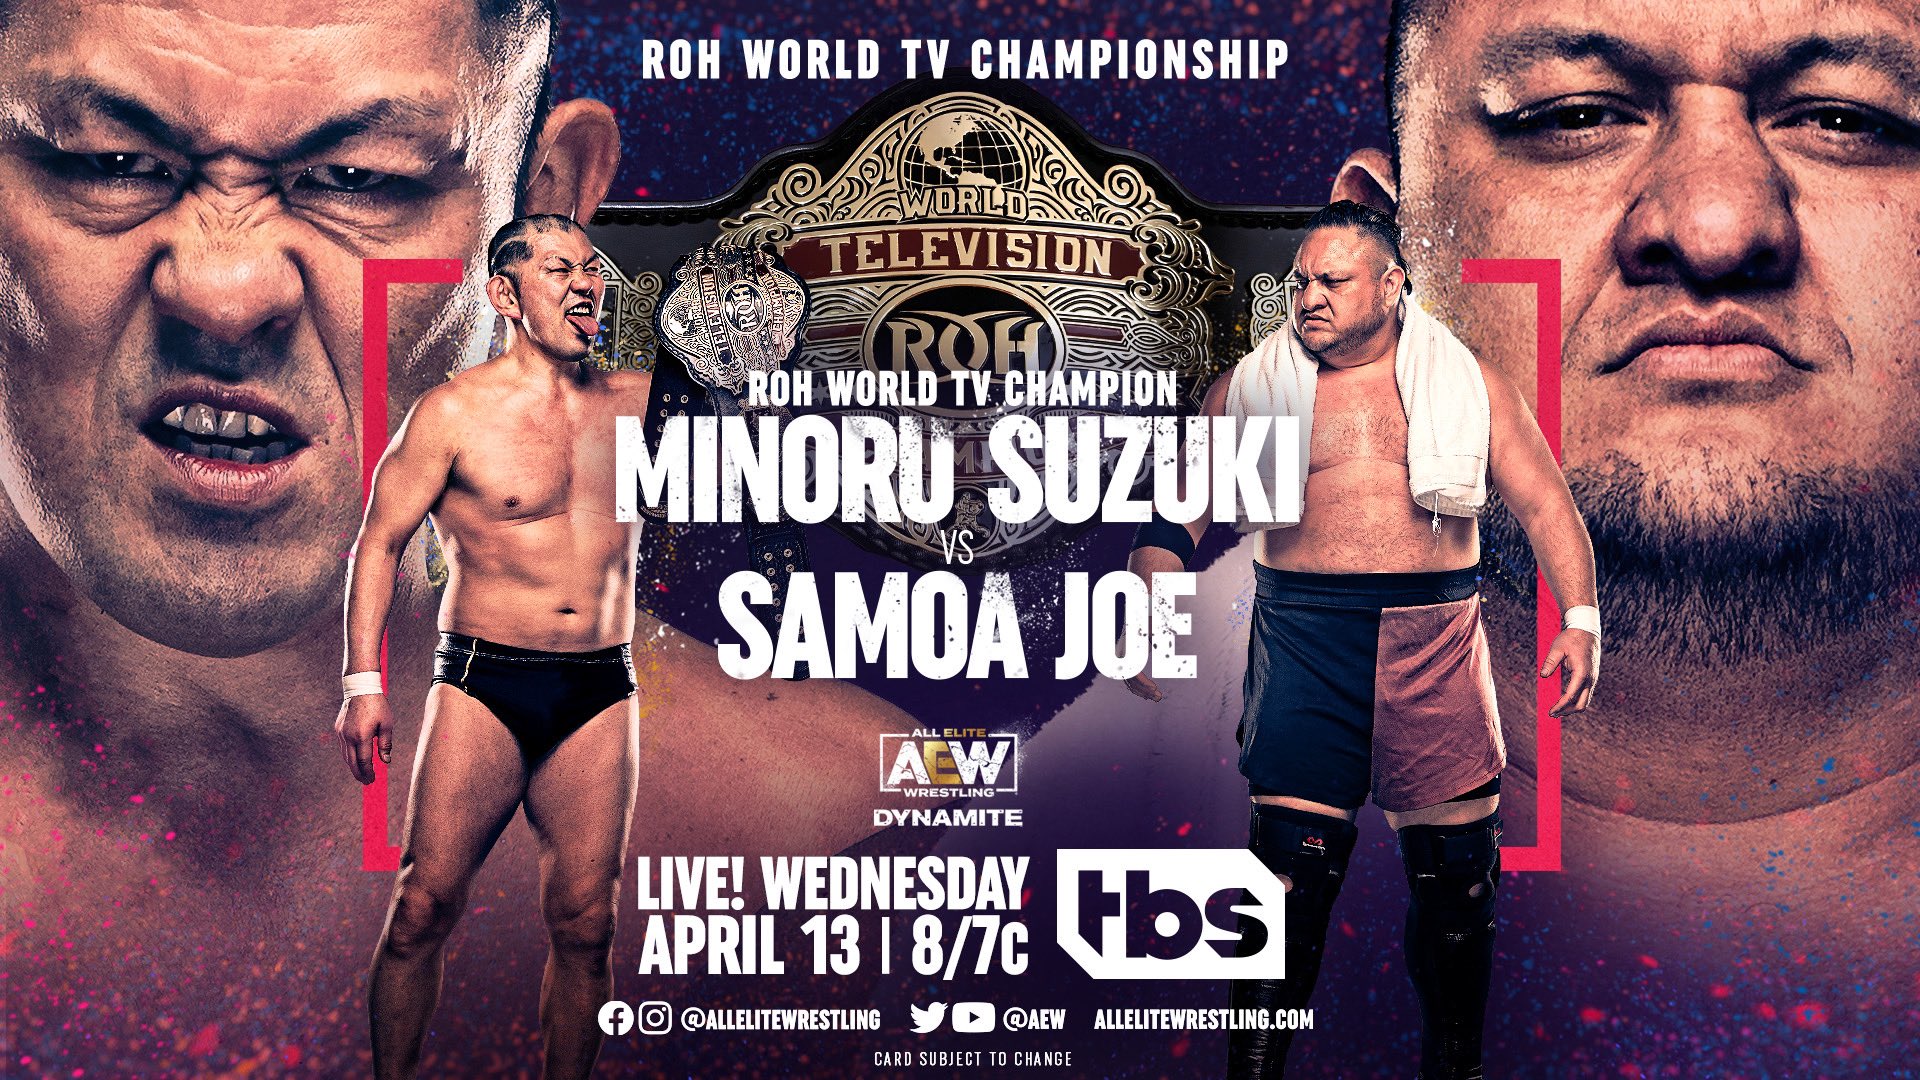 Minoru Suzuki to defend ROH TV title against Samoa Joe on Dynamite